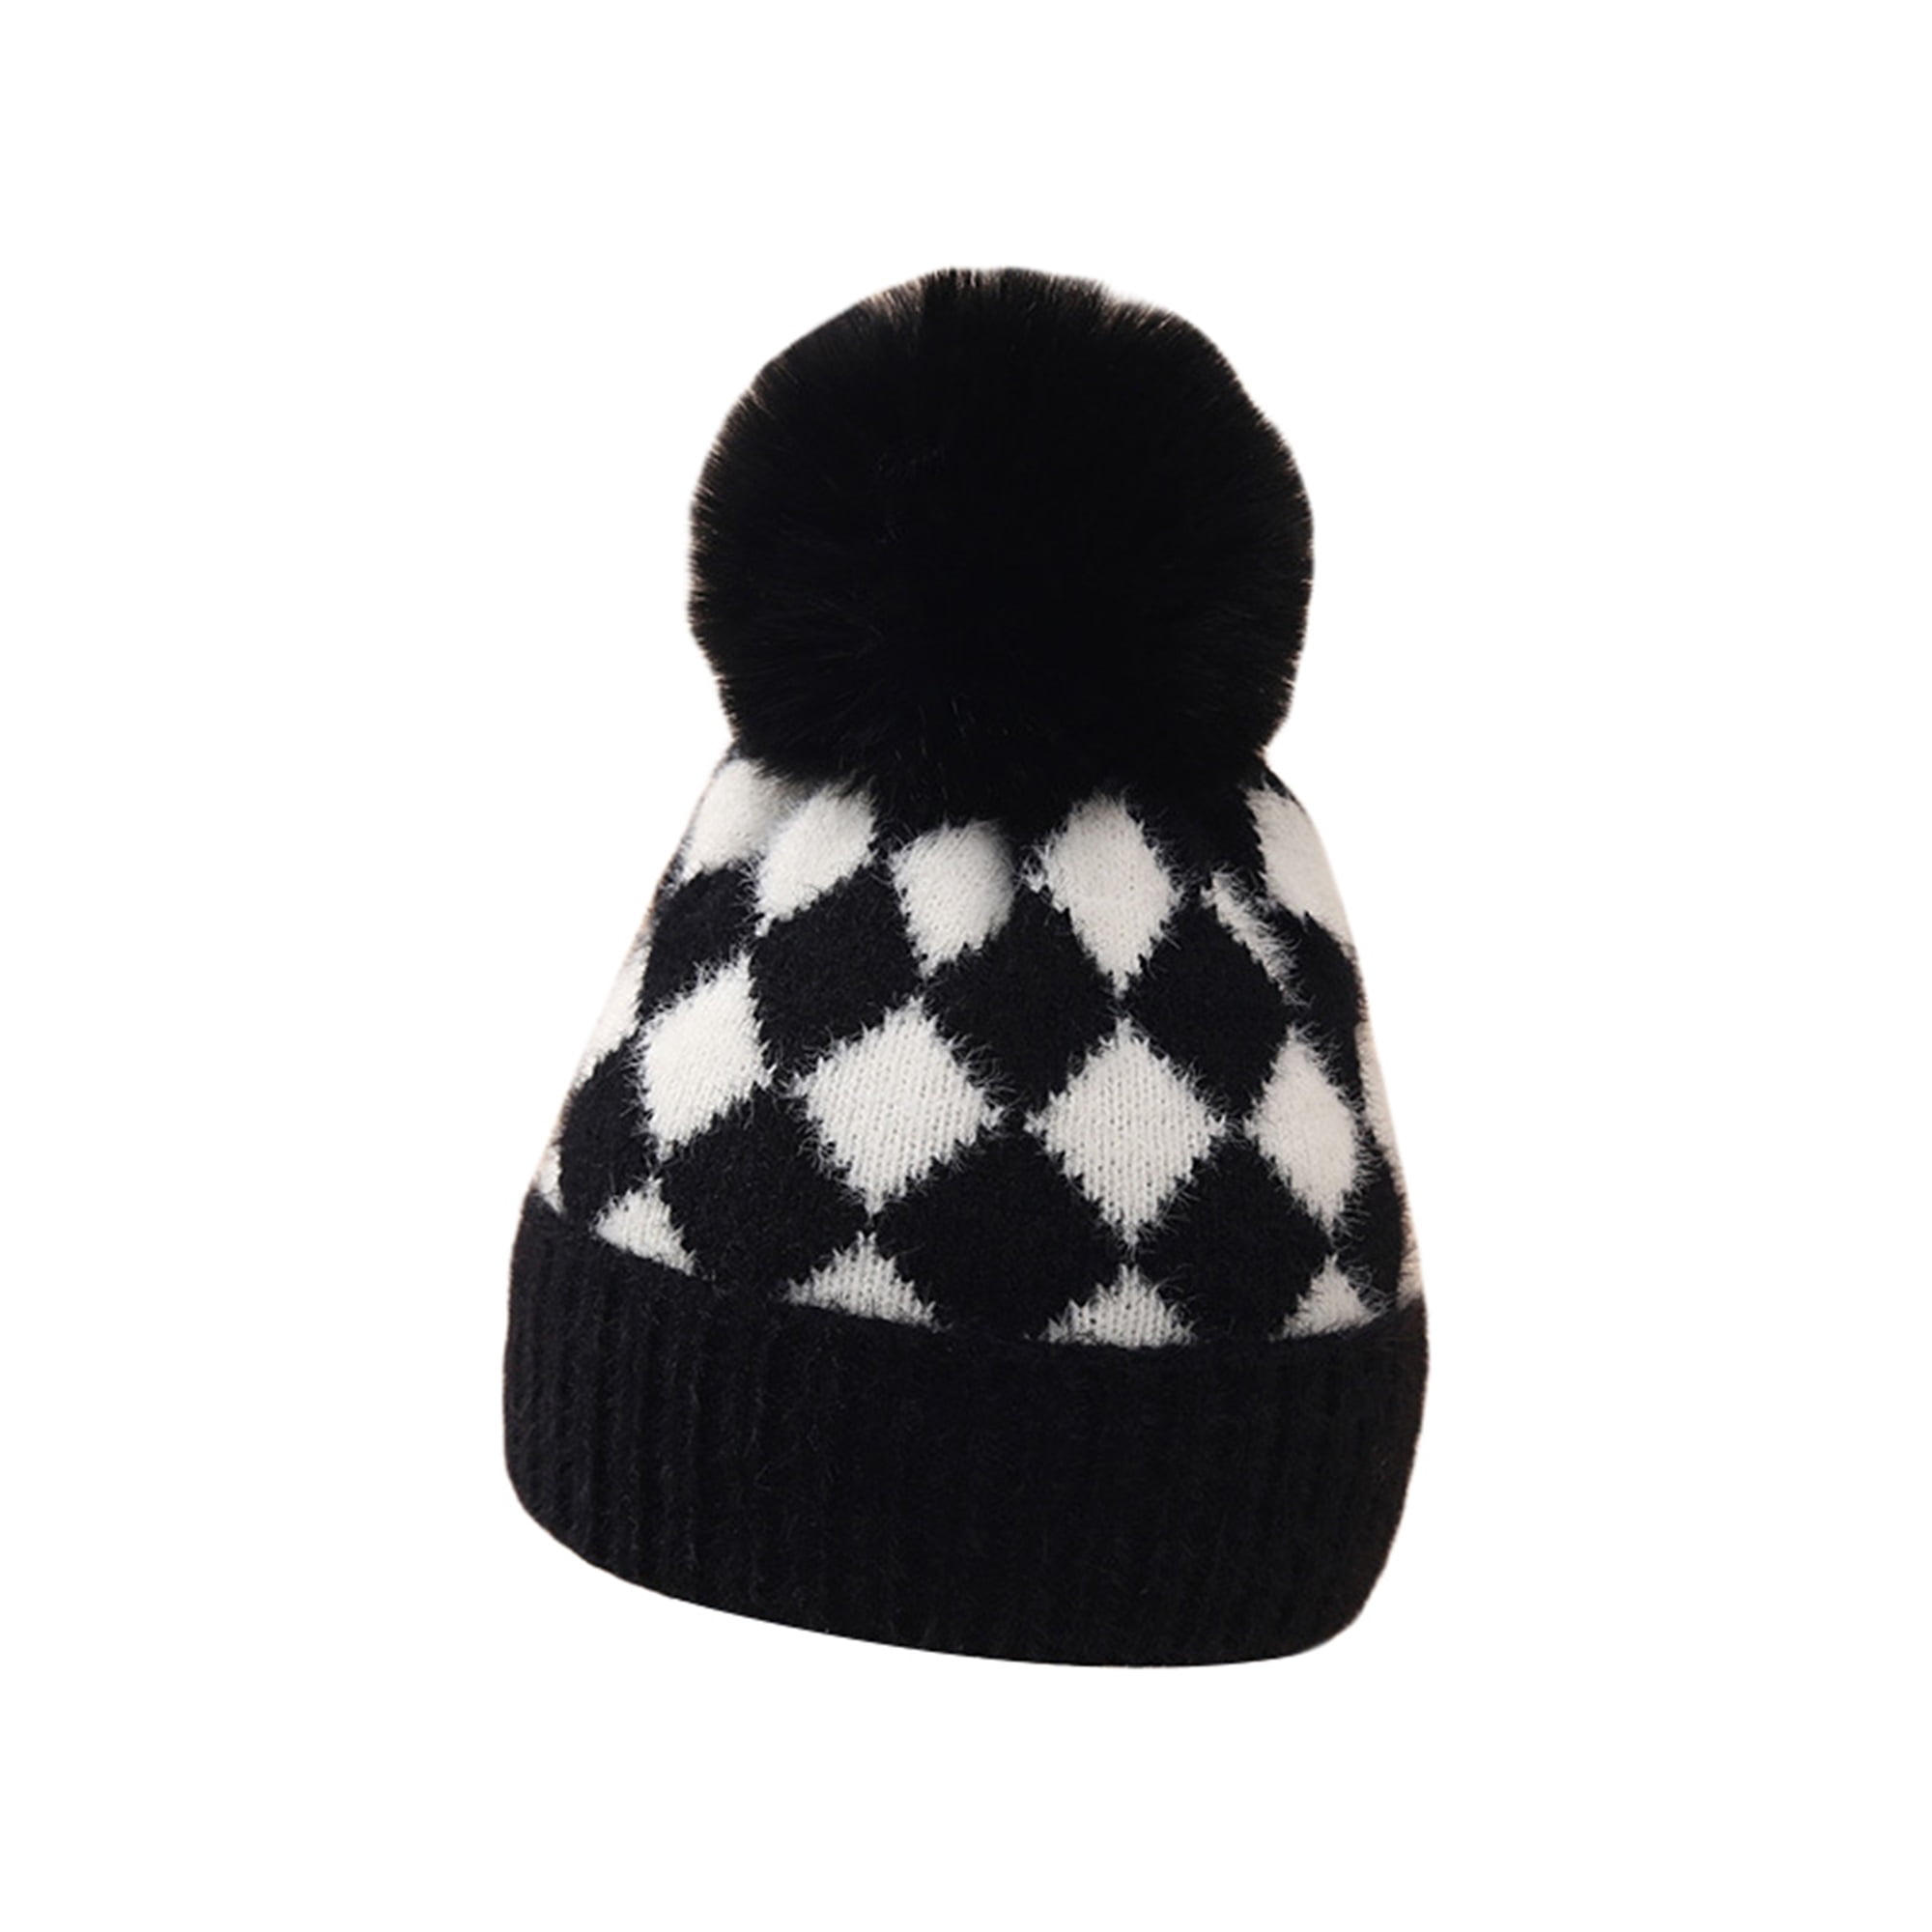 0-12 Months Baby Boys Plaid Knit Beanie Warm Cap Hat for Infant Newborn ...